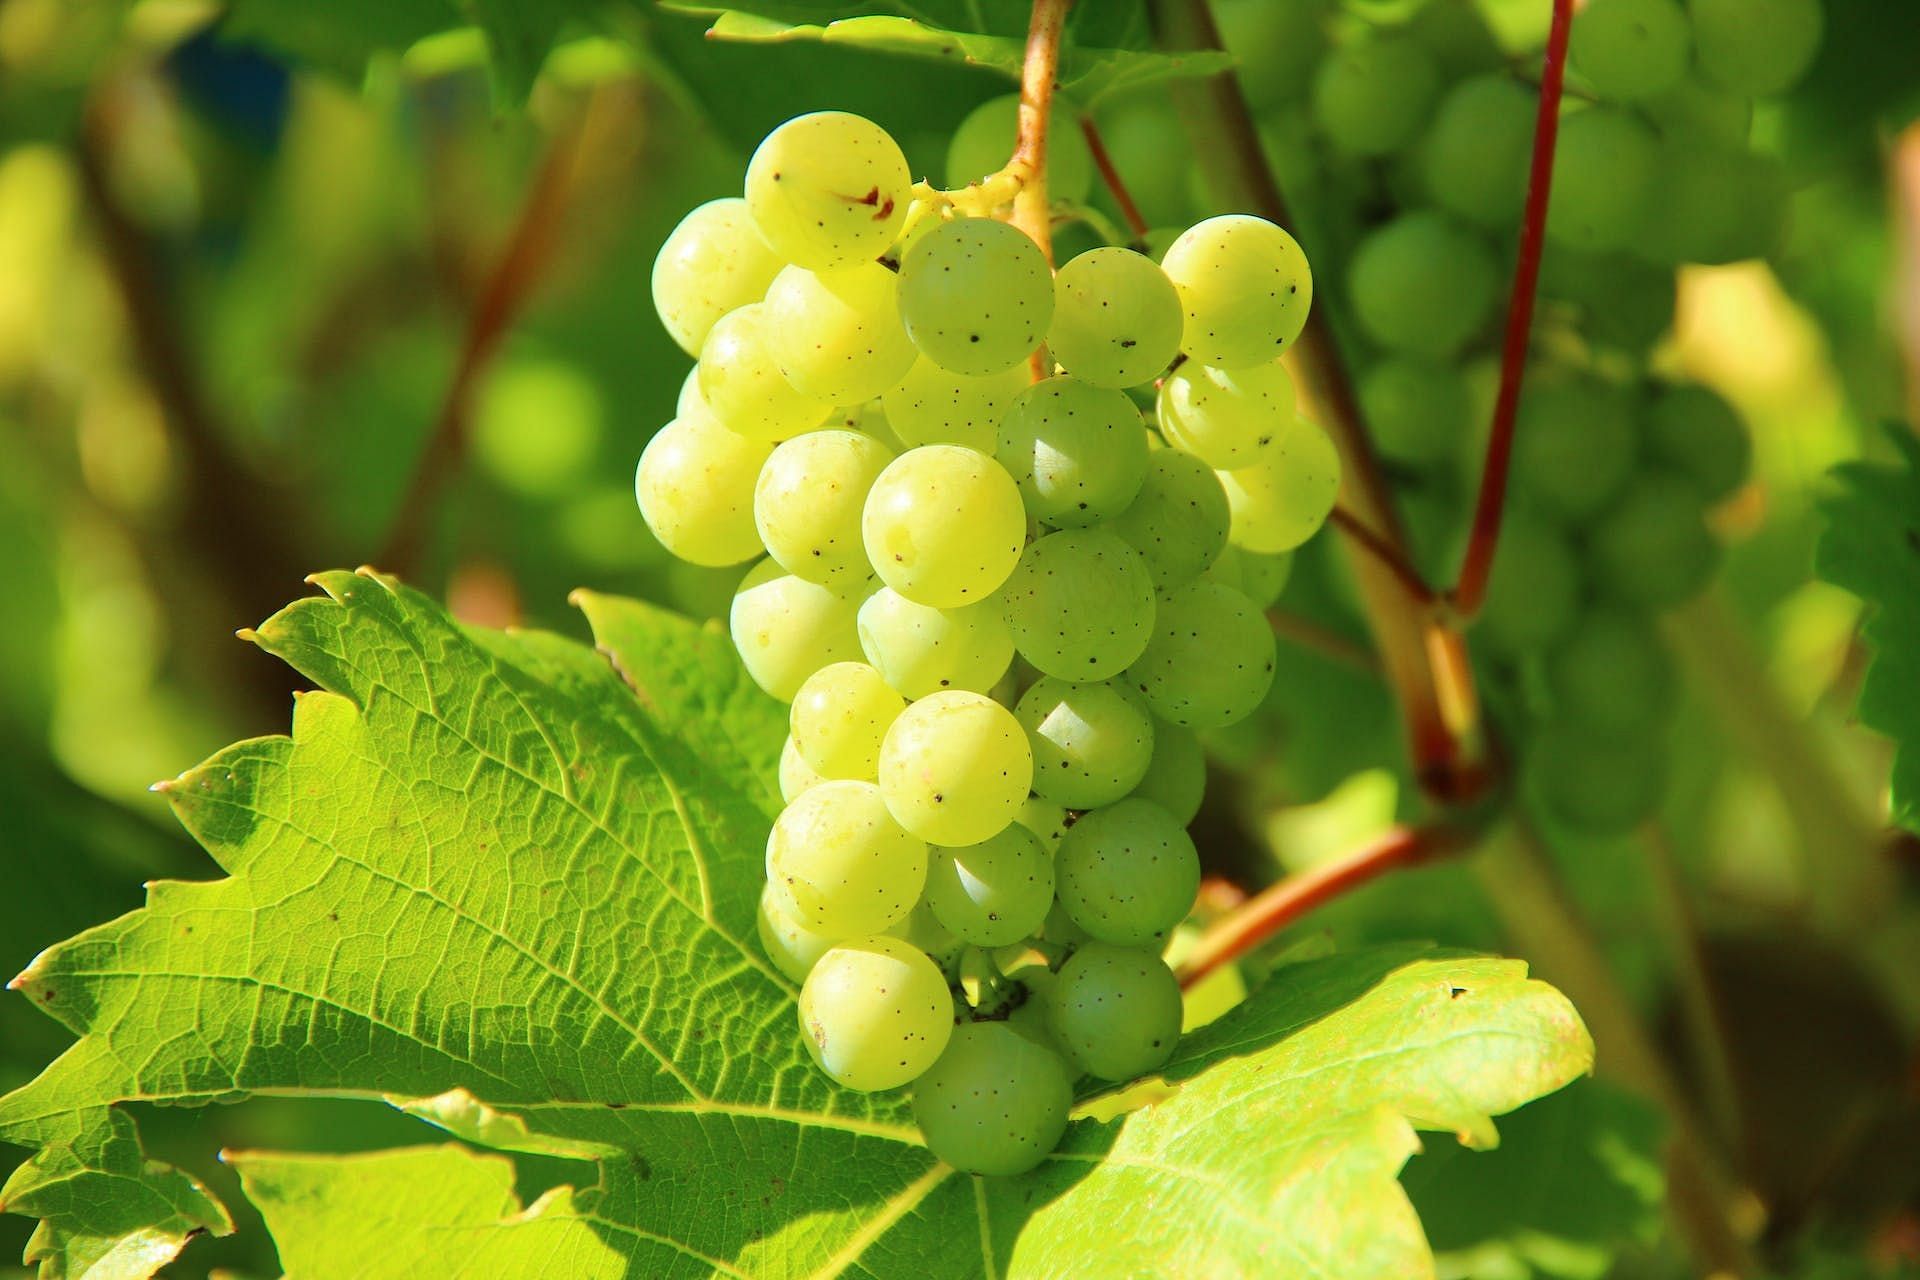 Grapes can raise blood sugar level. (Image via Pexels/Pixabay)